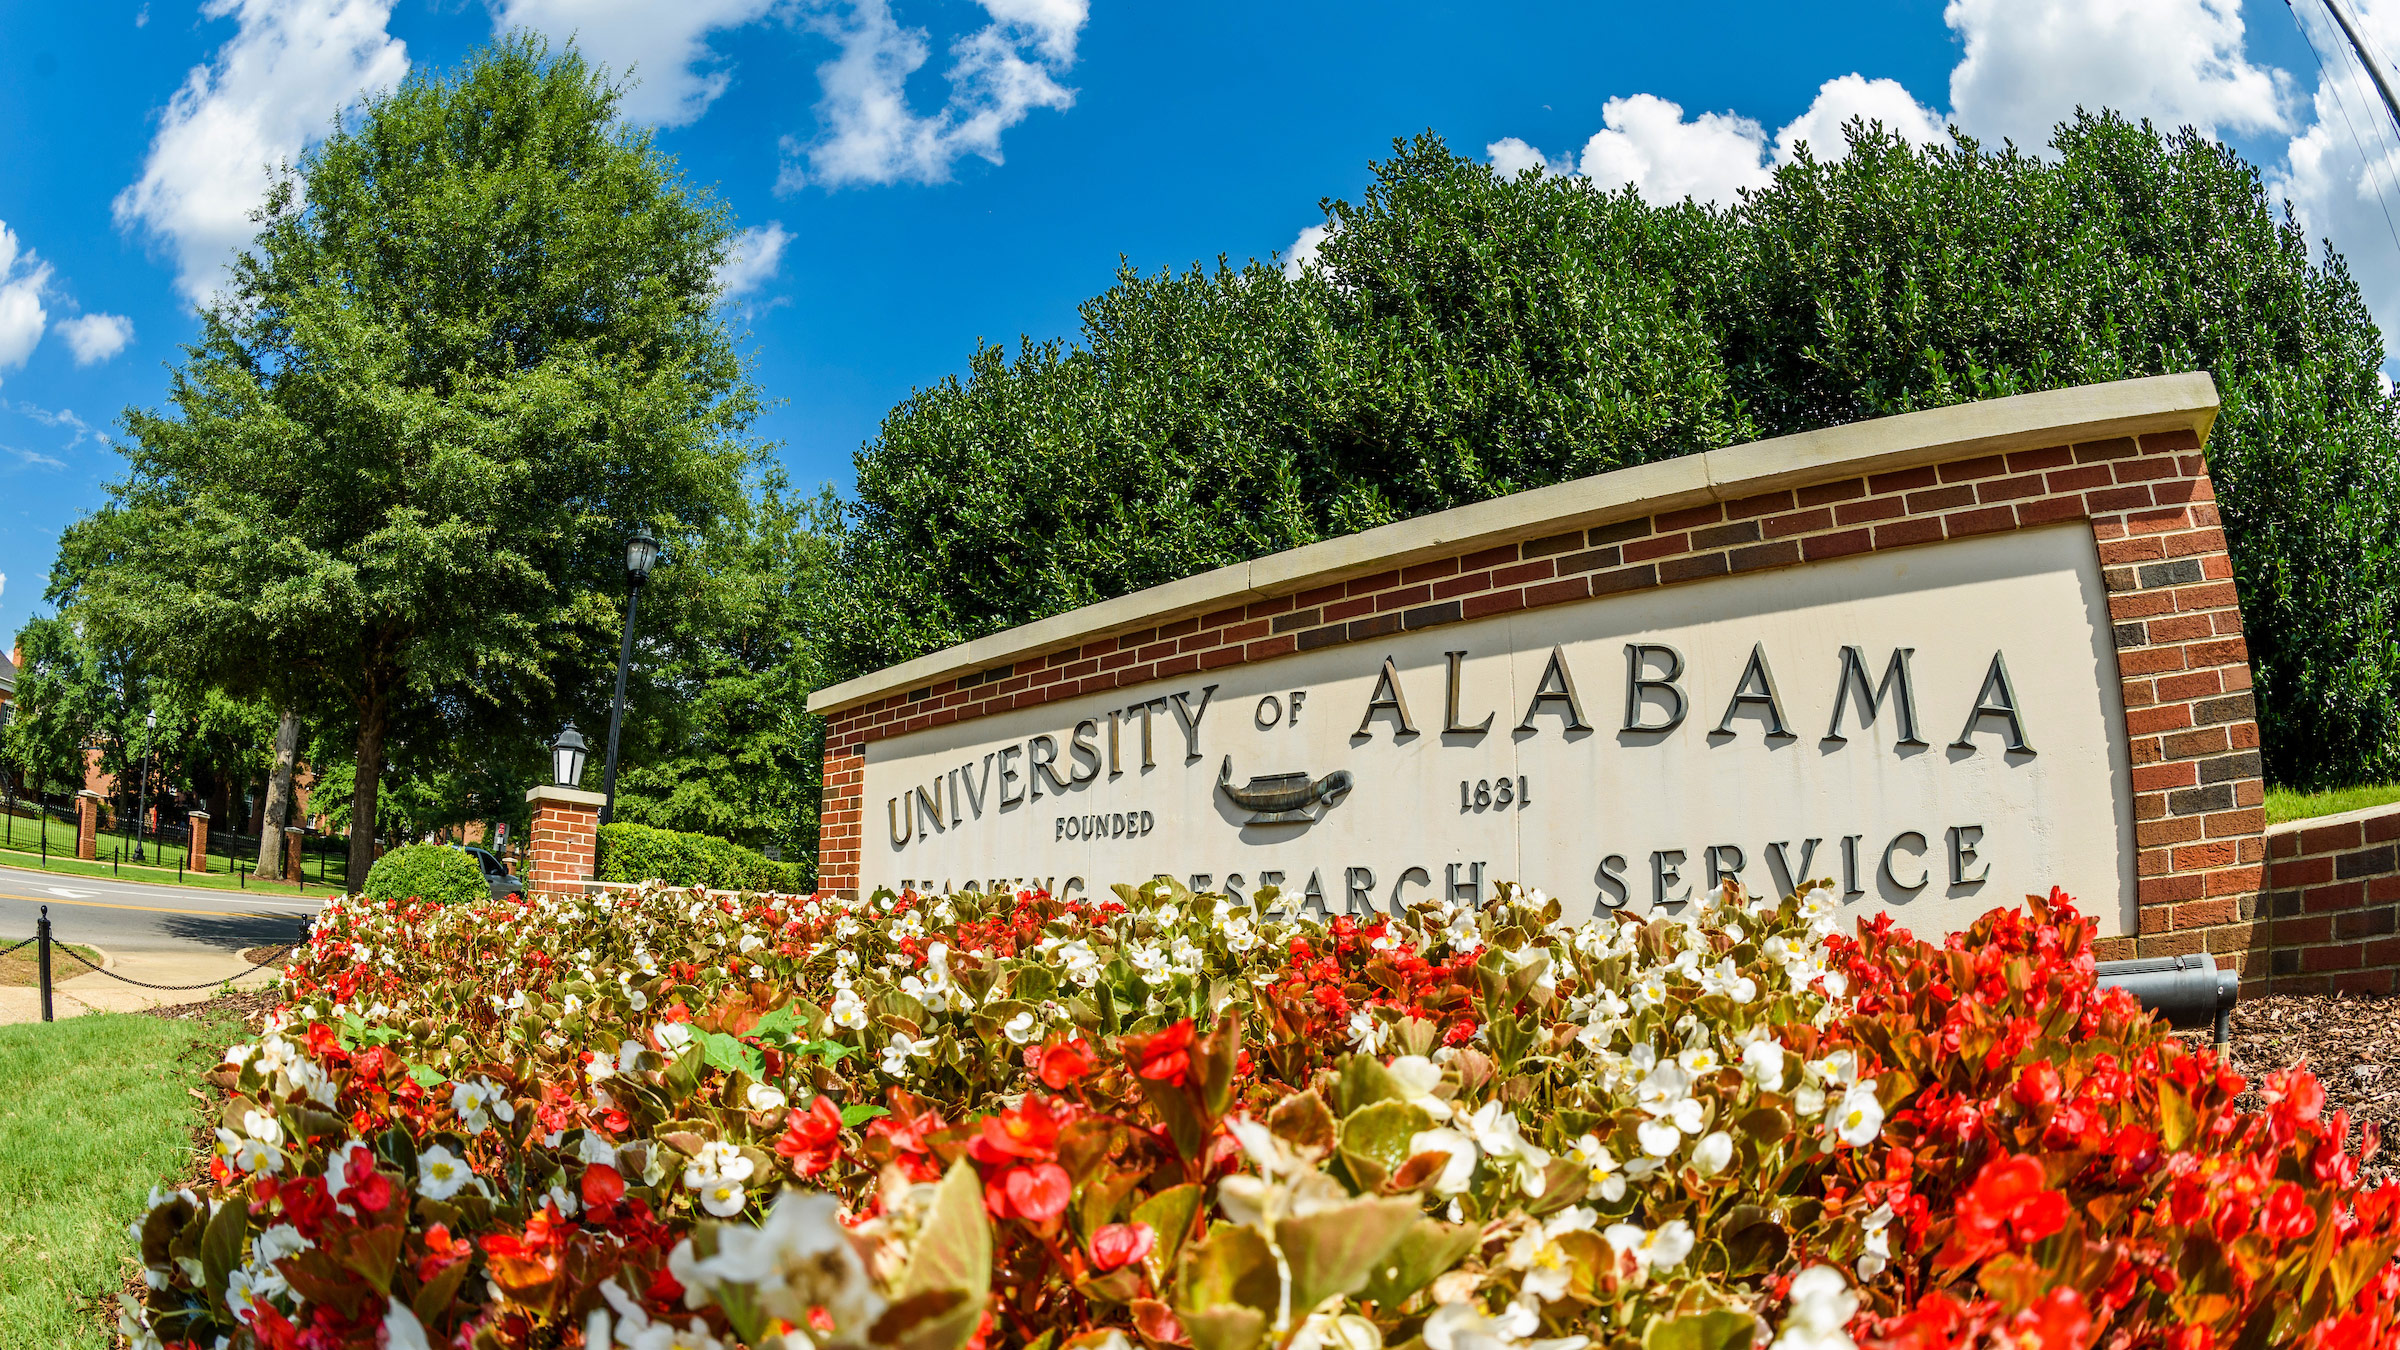 UA campus sign behind flowerbed